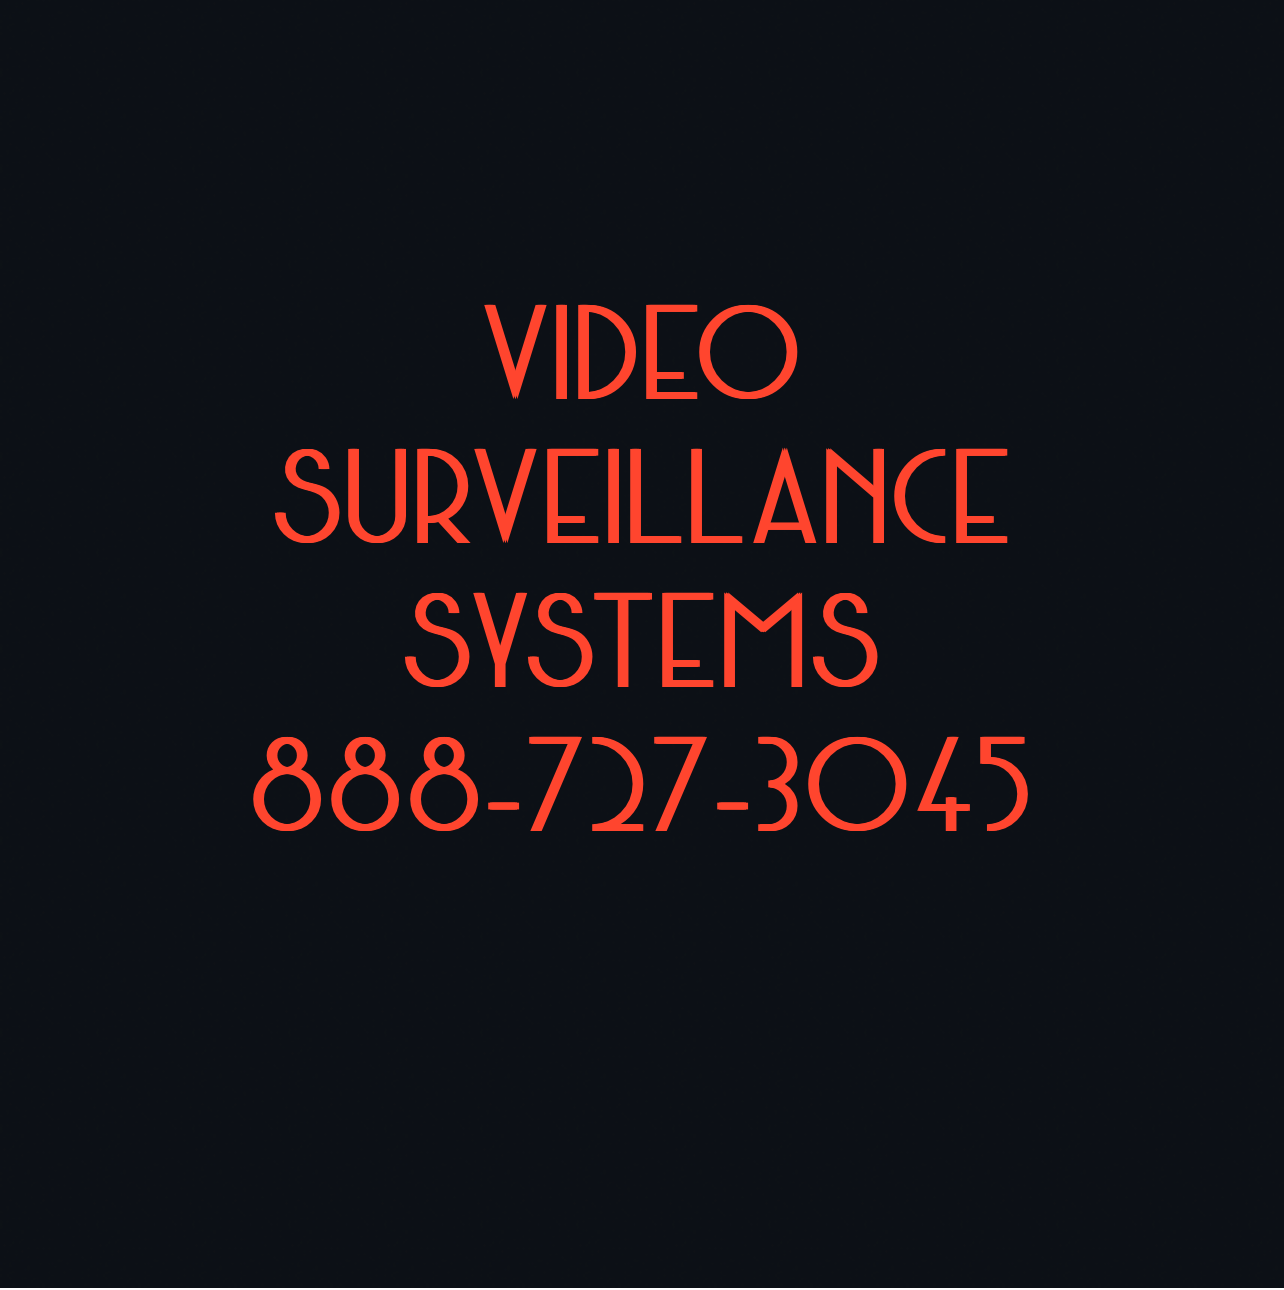 Custom neon sign - Video Surveillance Systems 888-727-3045